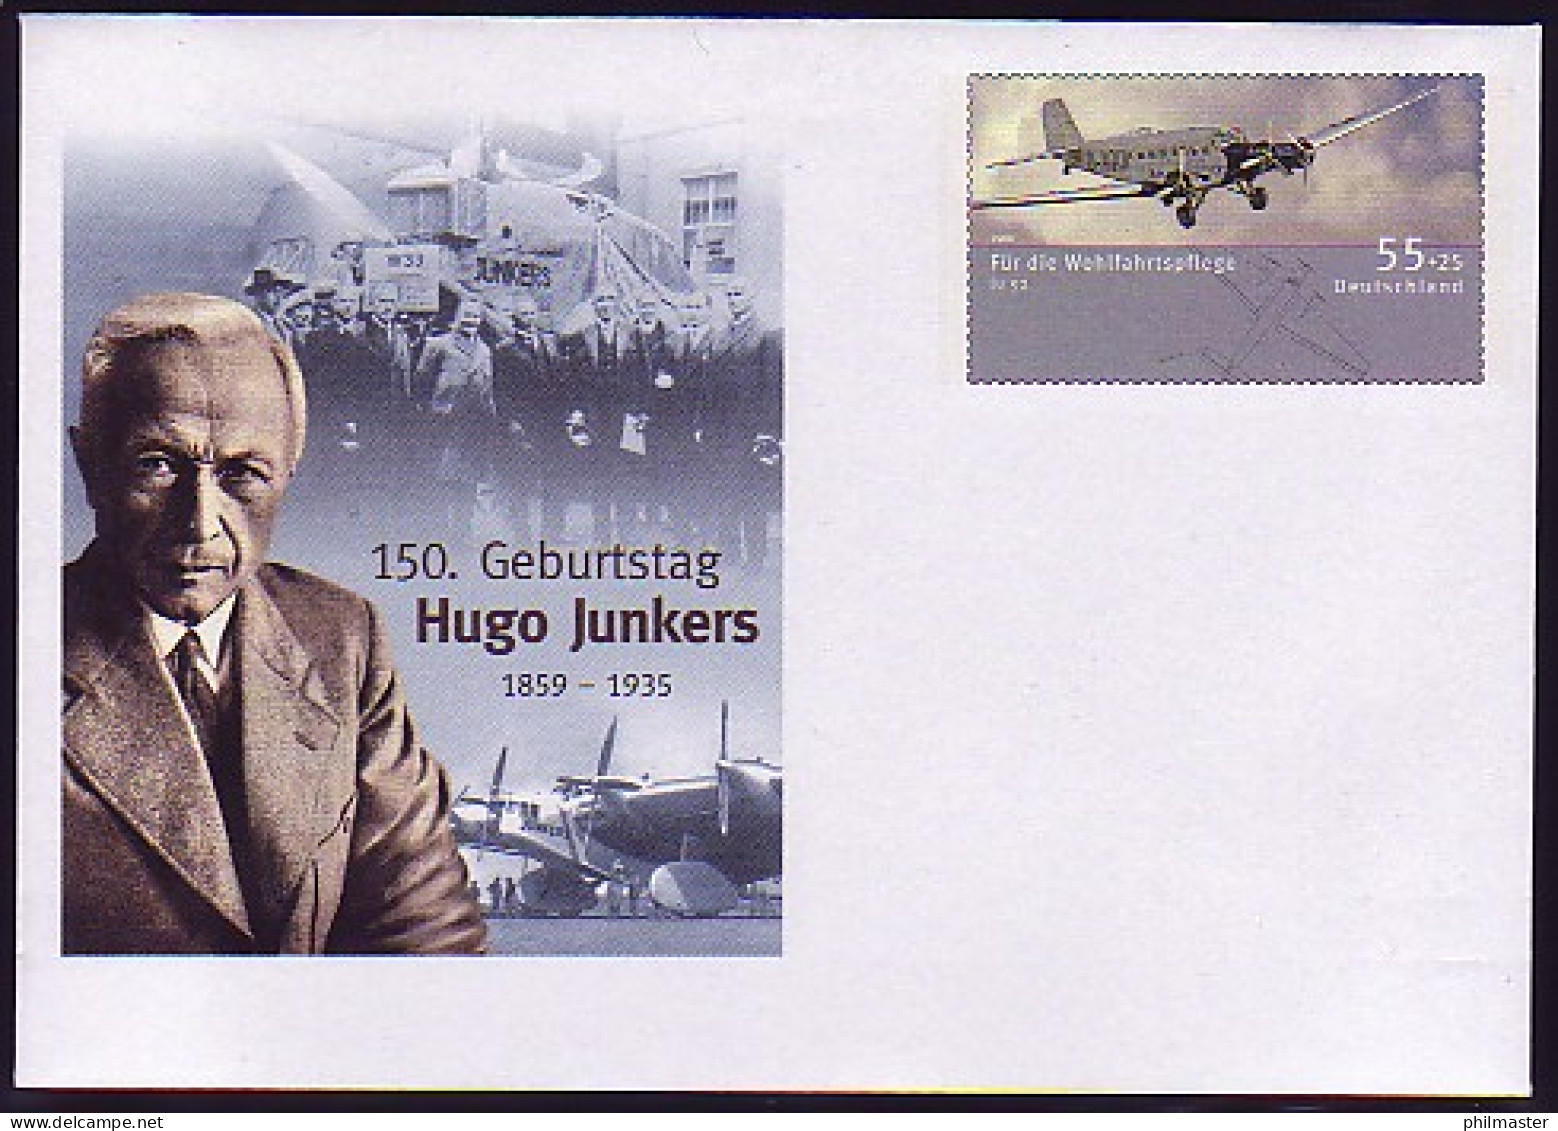 USo 173 Hugo Junkers 2009, Postfrisch - Covers - Mint